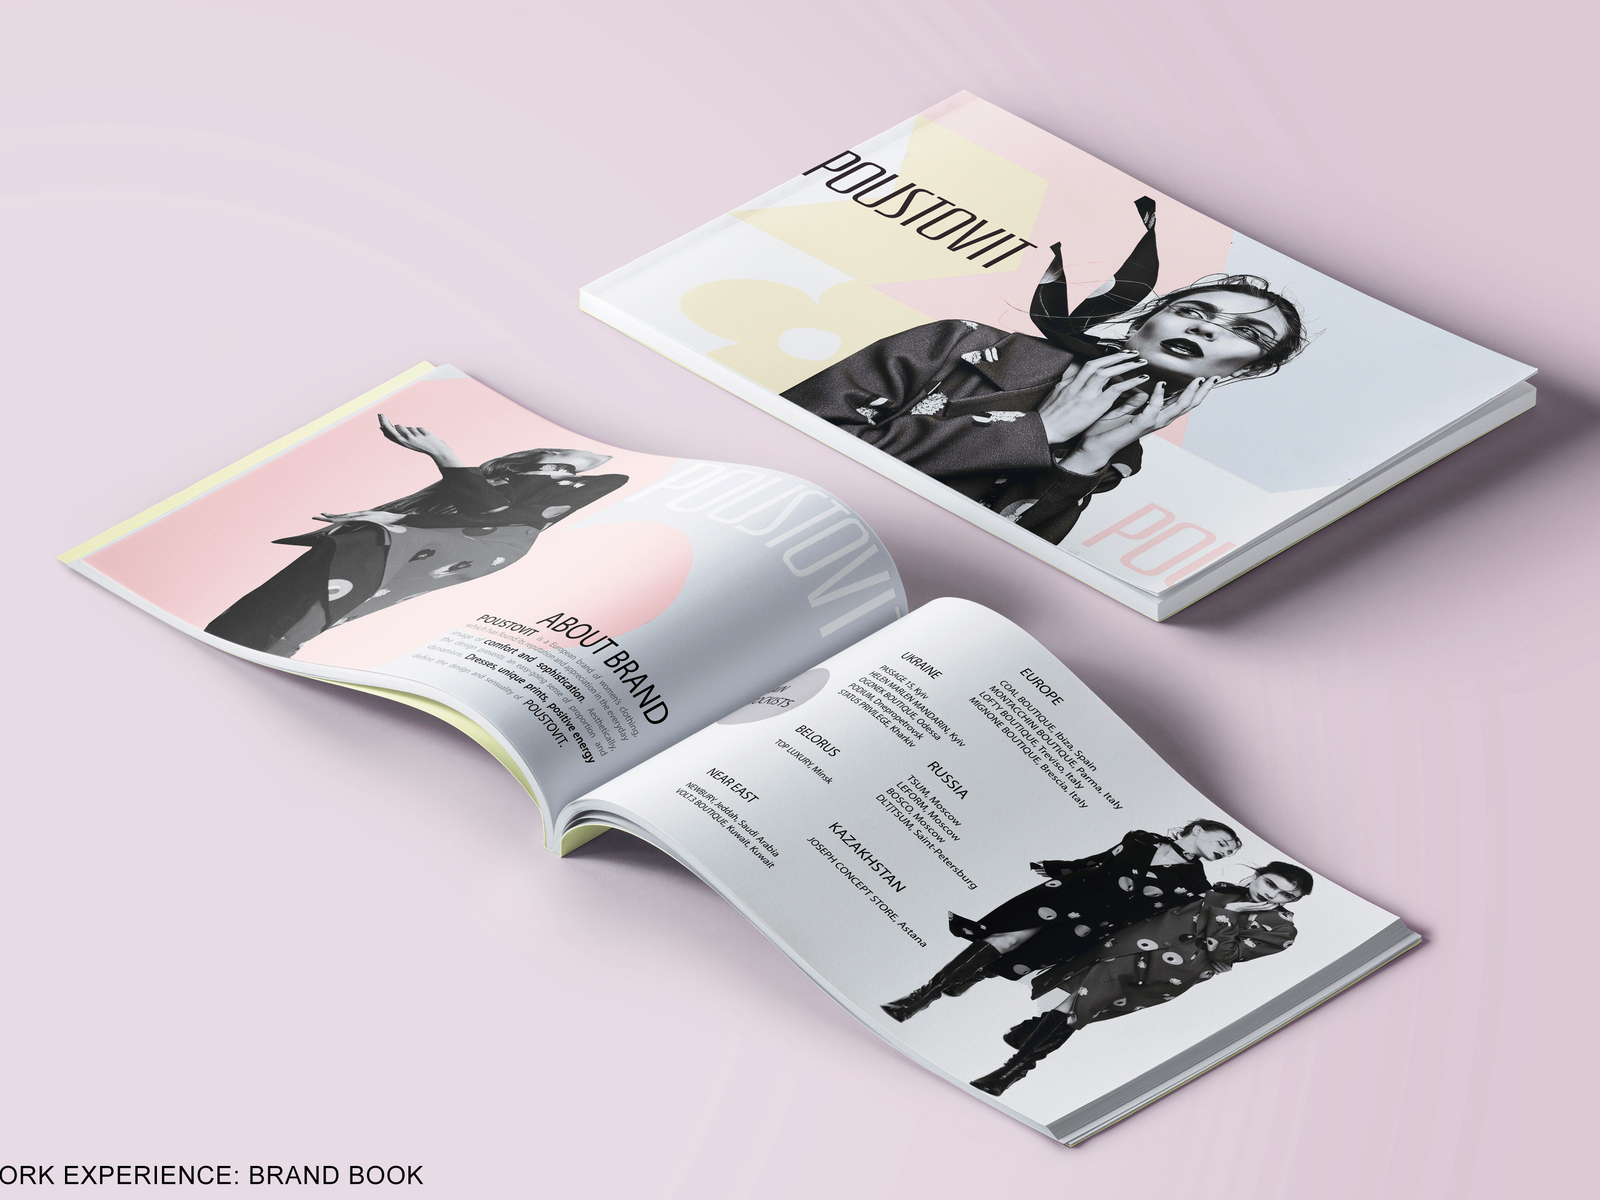 Fashion Brand Book by Galya Ivanova on Dribbble